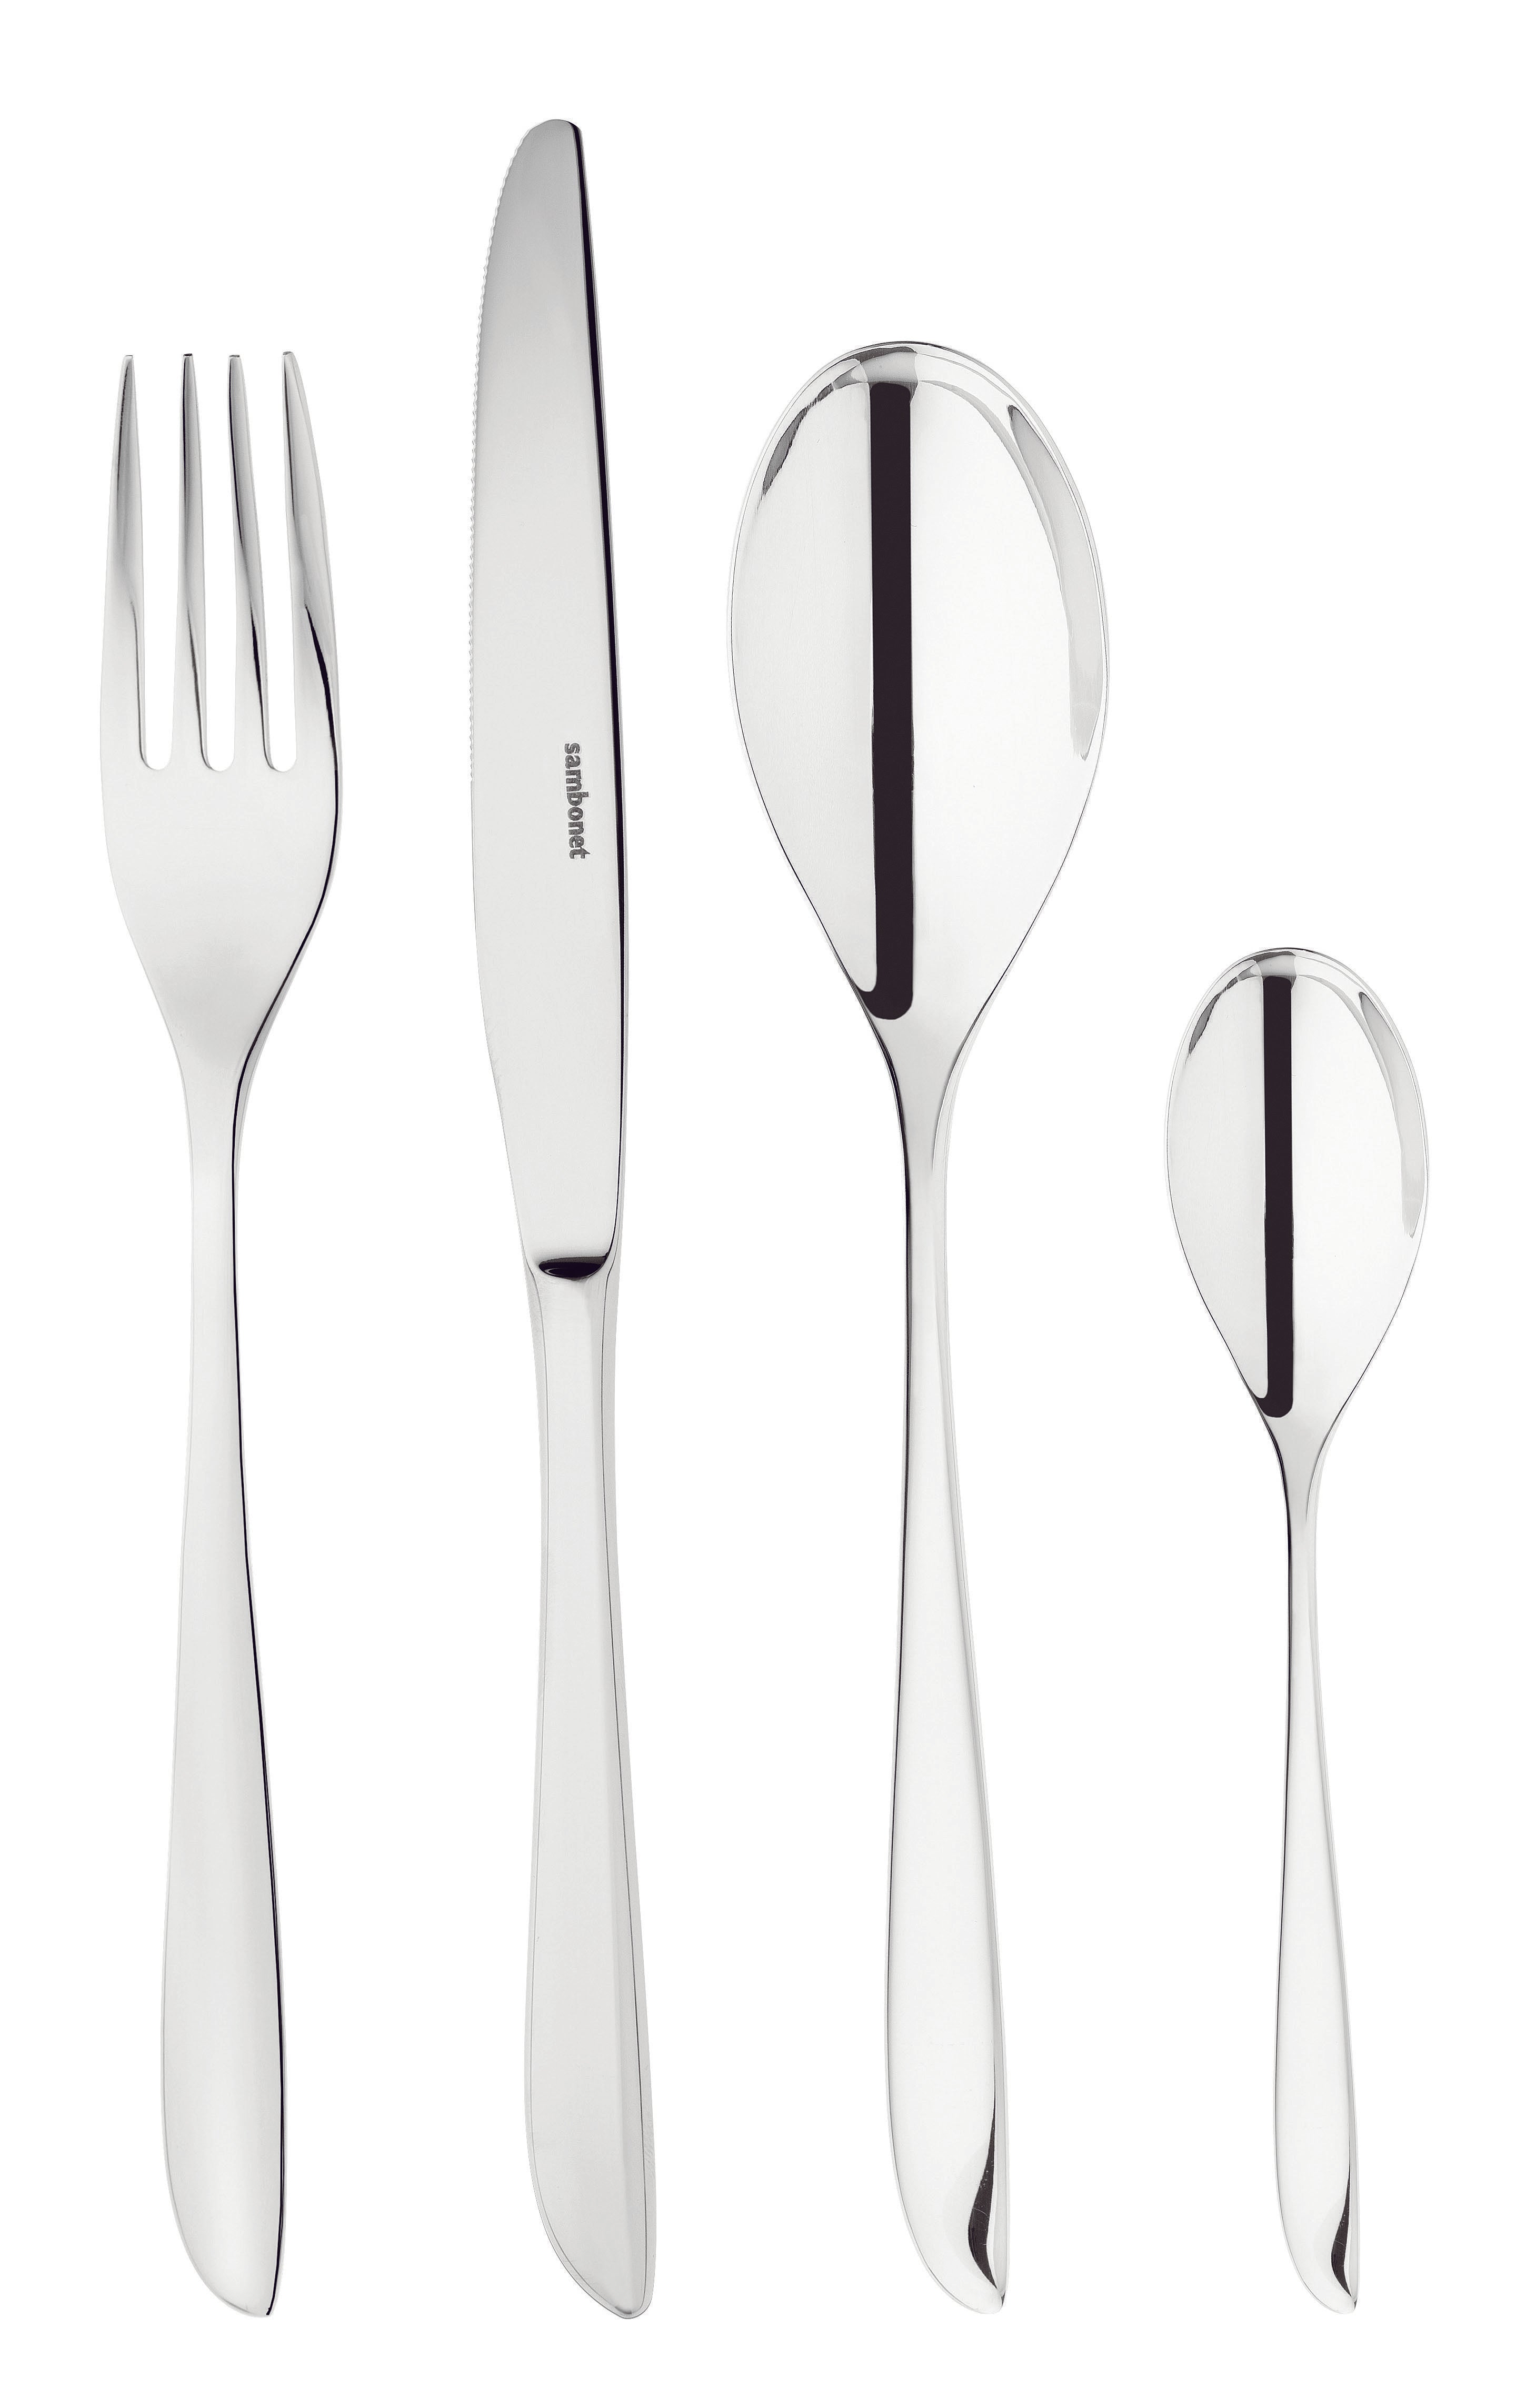 Sambonet Leaf Cutlery Set 24 pieces Stainless steel